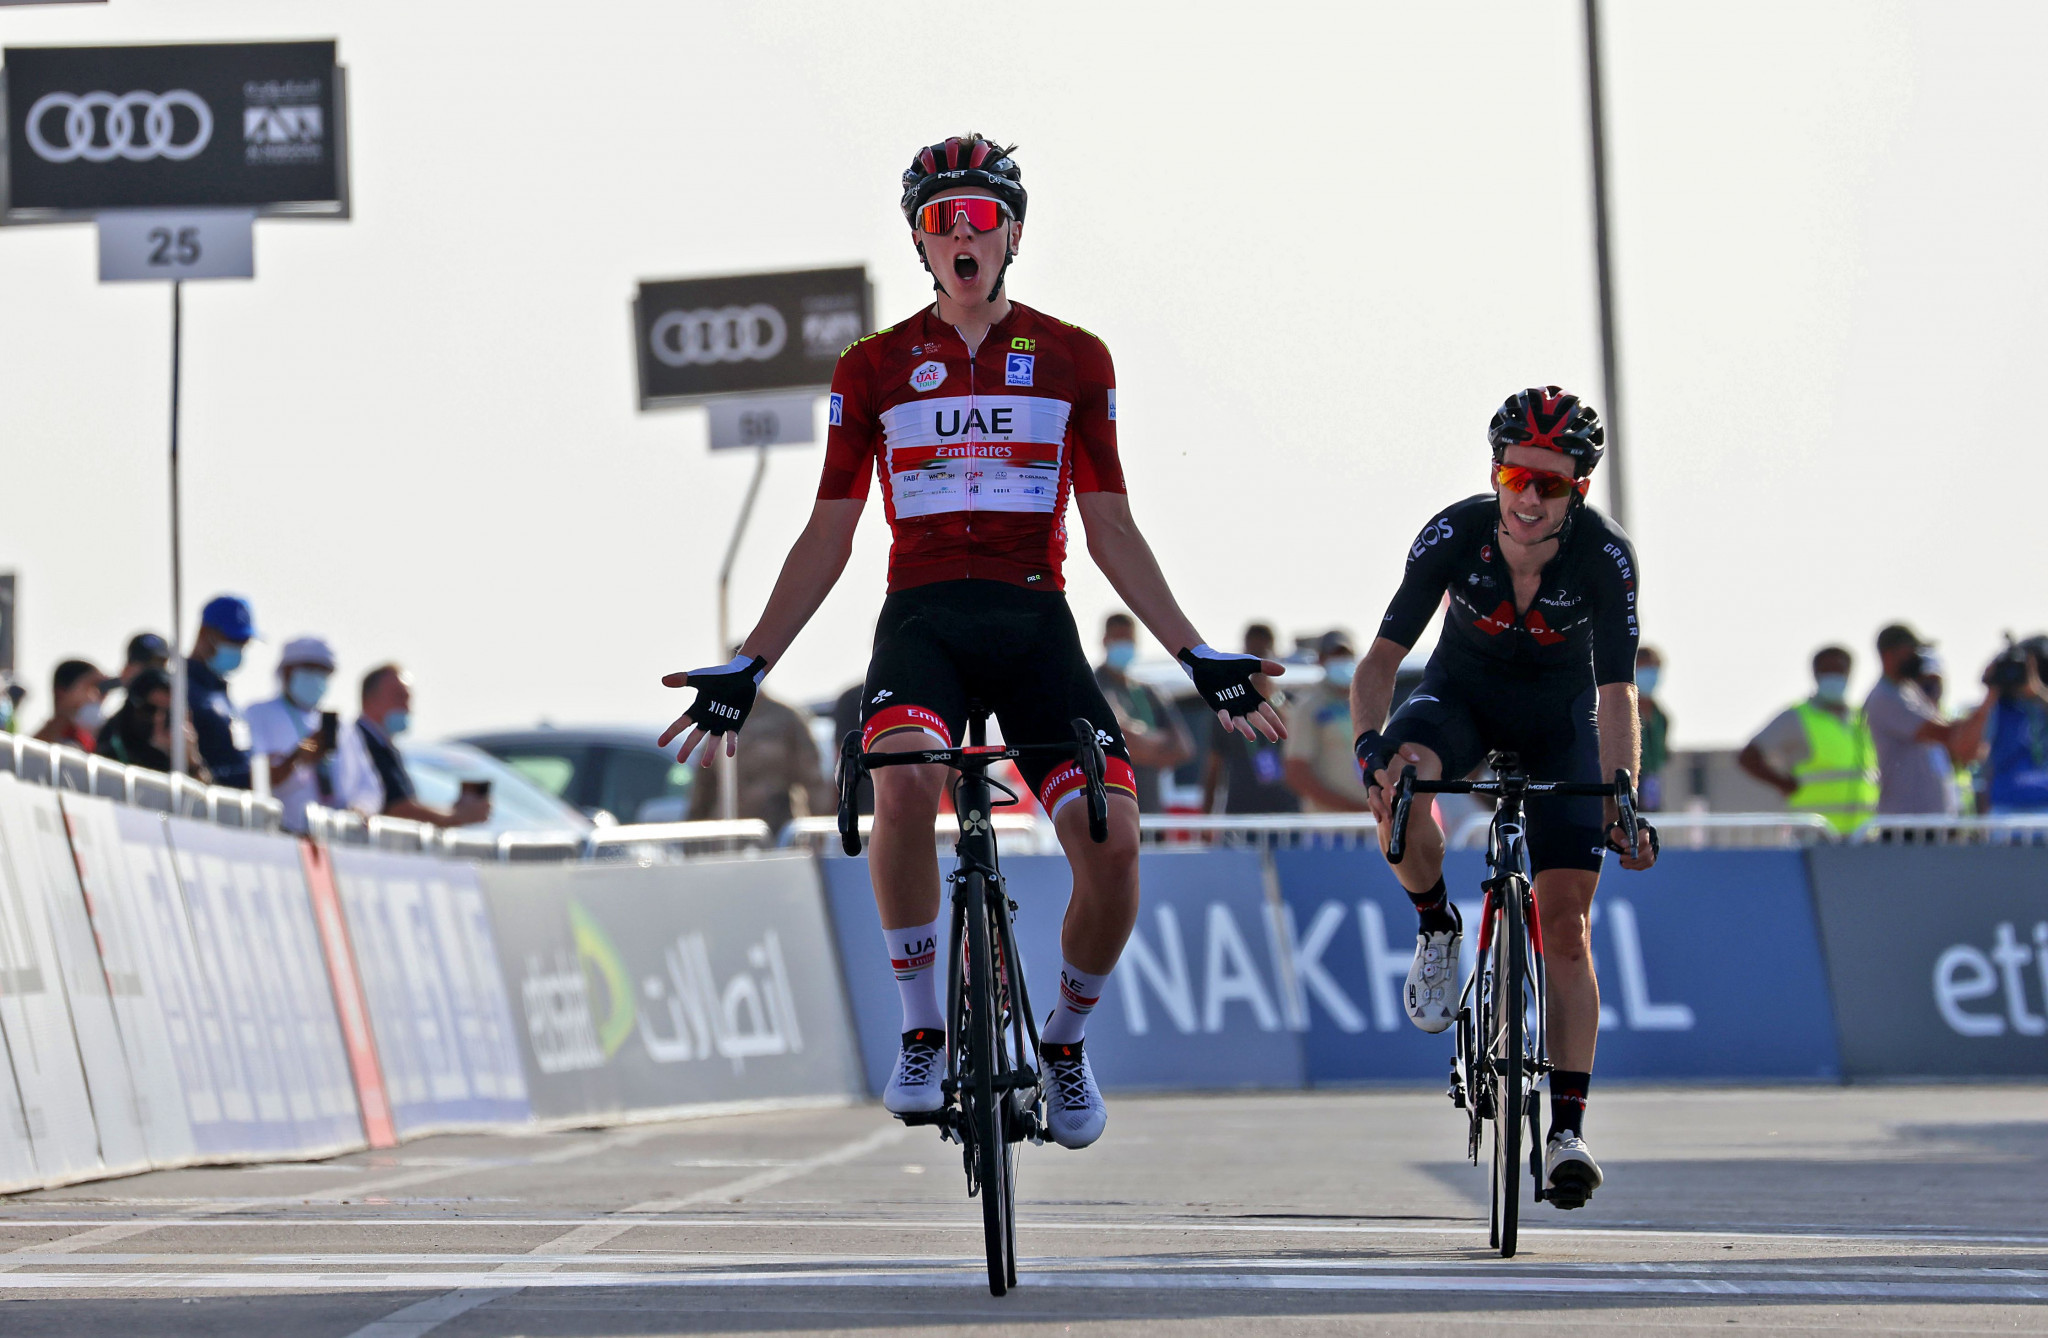 Pogačar set to defend UAE Tour title as new UCI WorldTour season opens 